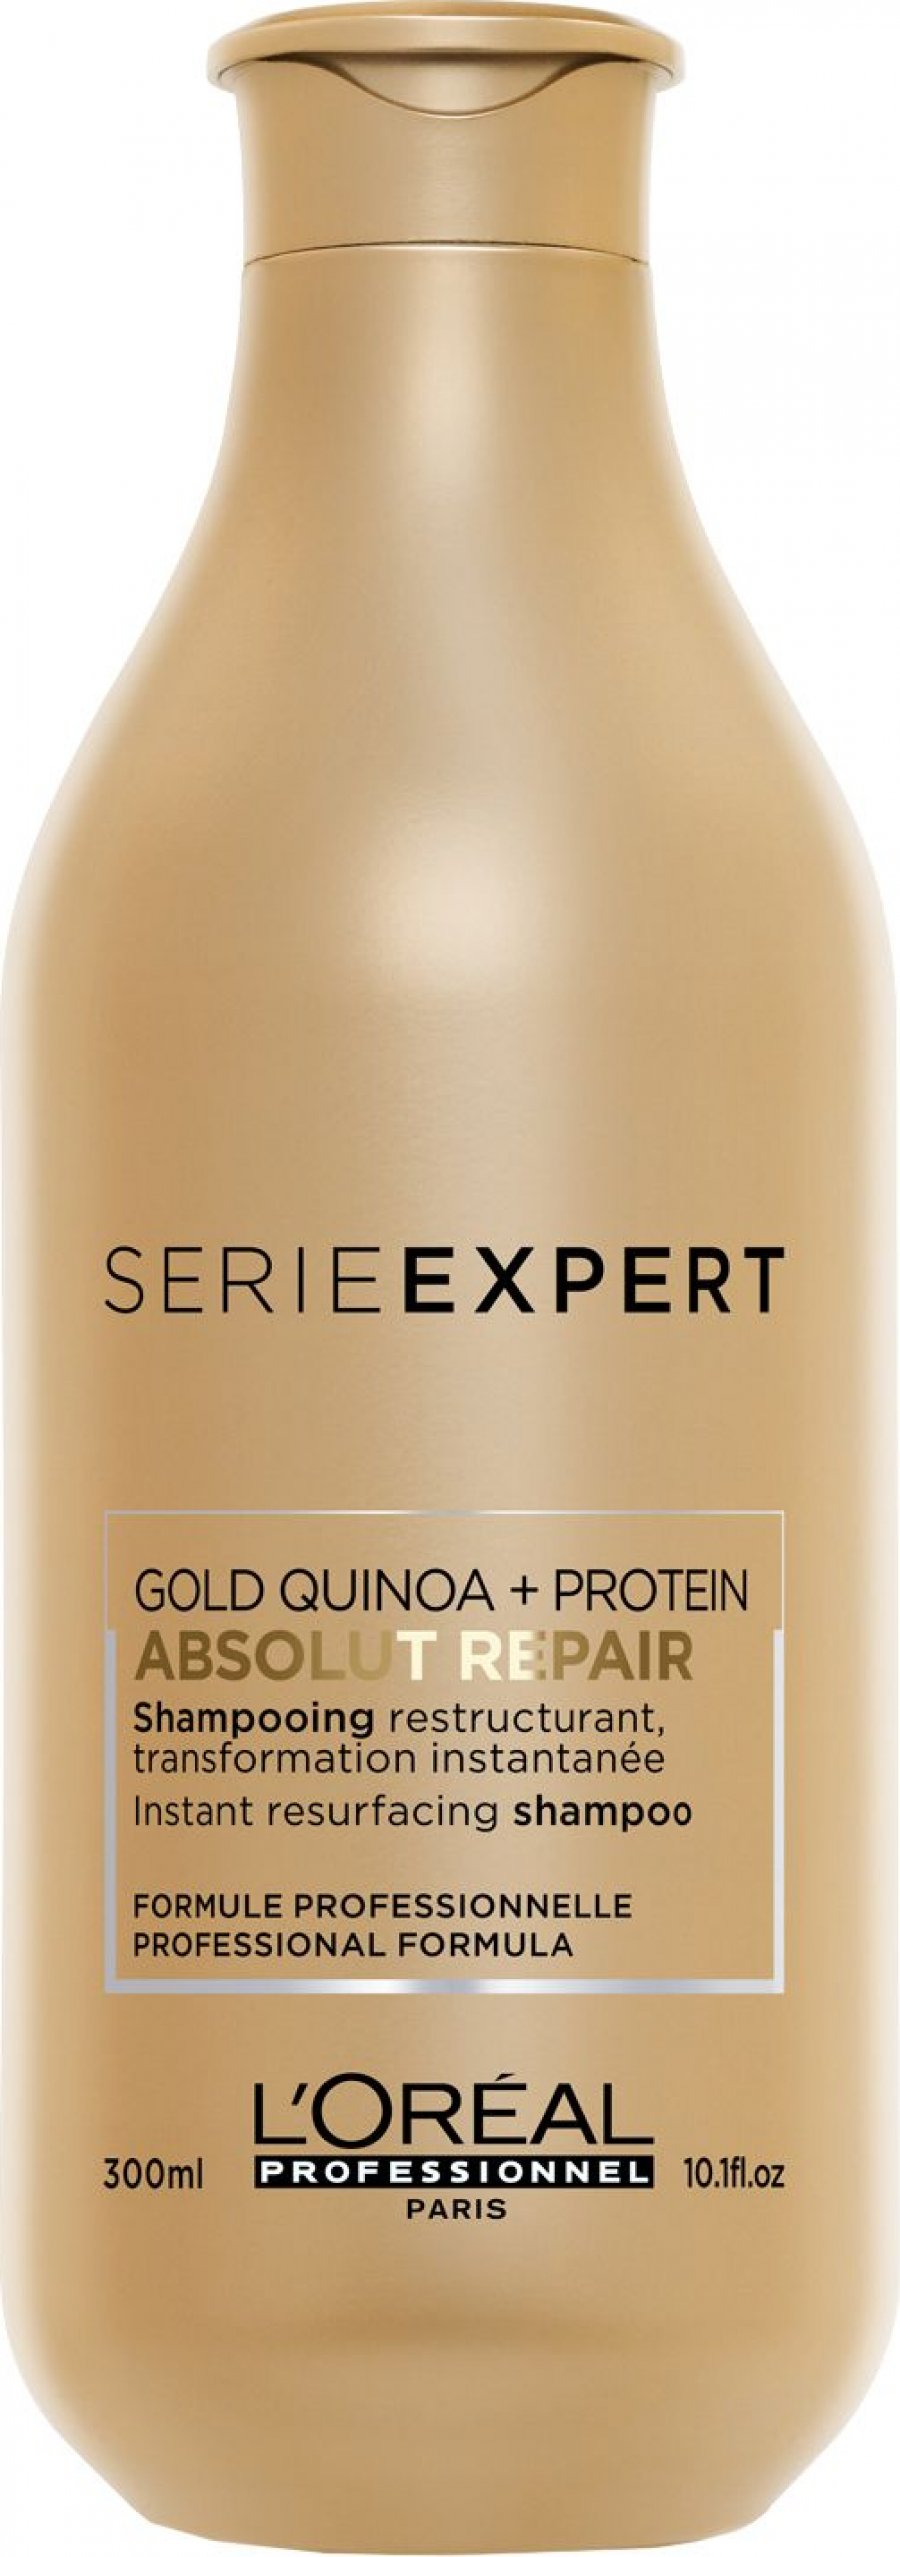 Gensidig Postbud Skylight Køb L'Oréal - Golden Repair Shampoo 300 ml